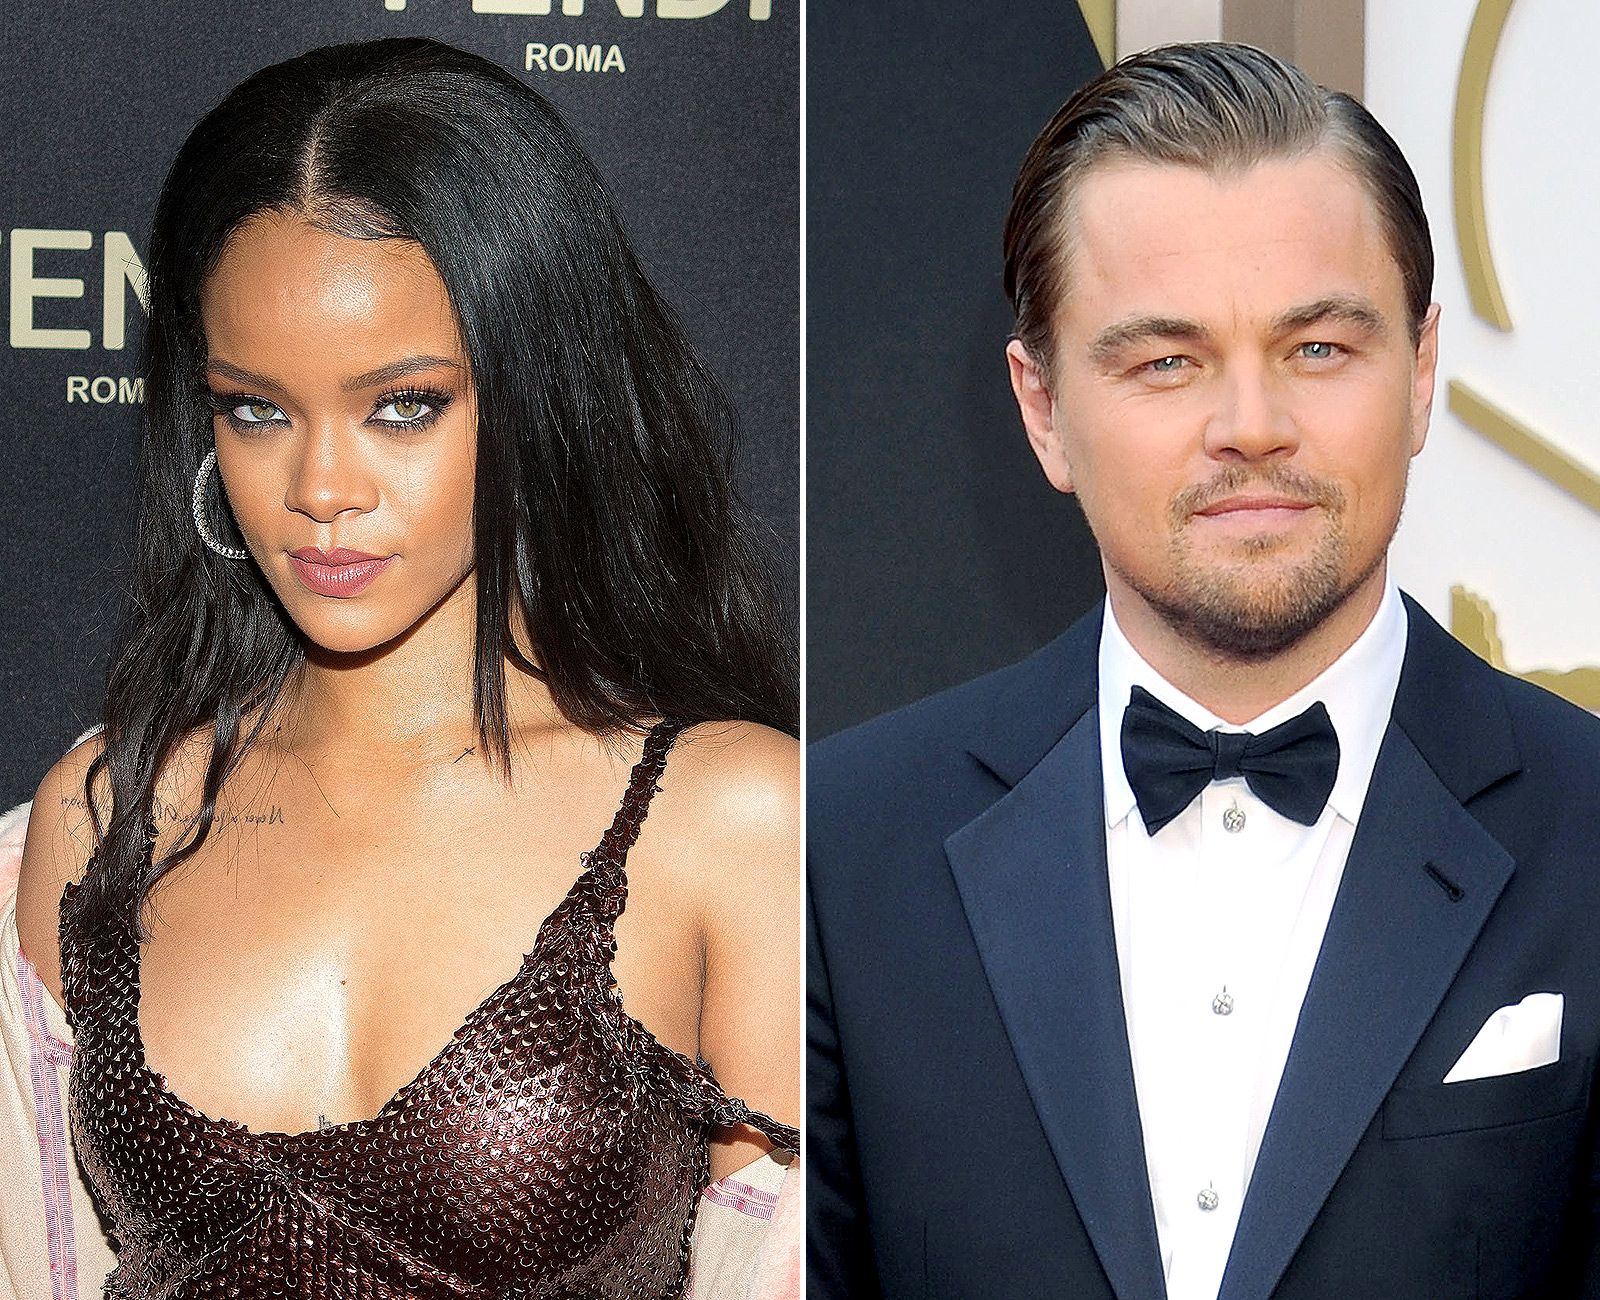 http://howomen.com/wp-content/uploads/2015/04/2-Rihanna-first-spoke-about-her-romance-with-Leonardo-DiCaprio.jpg